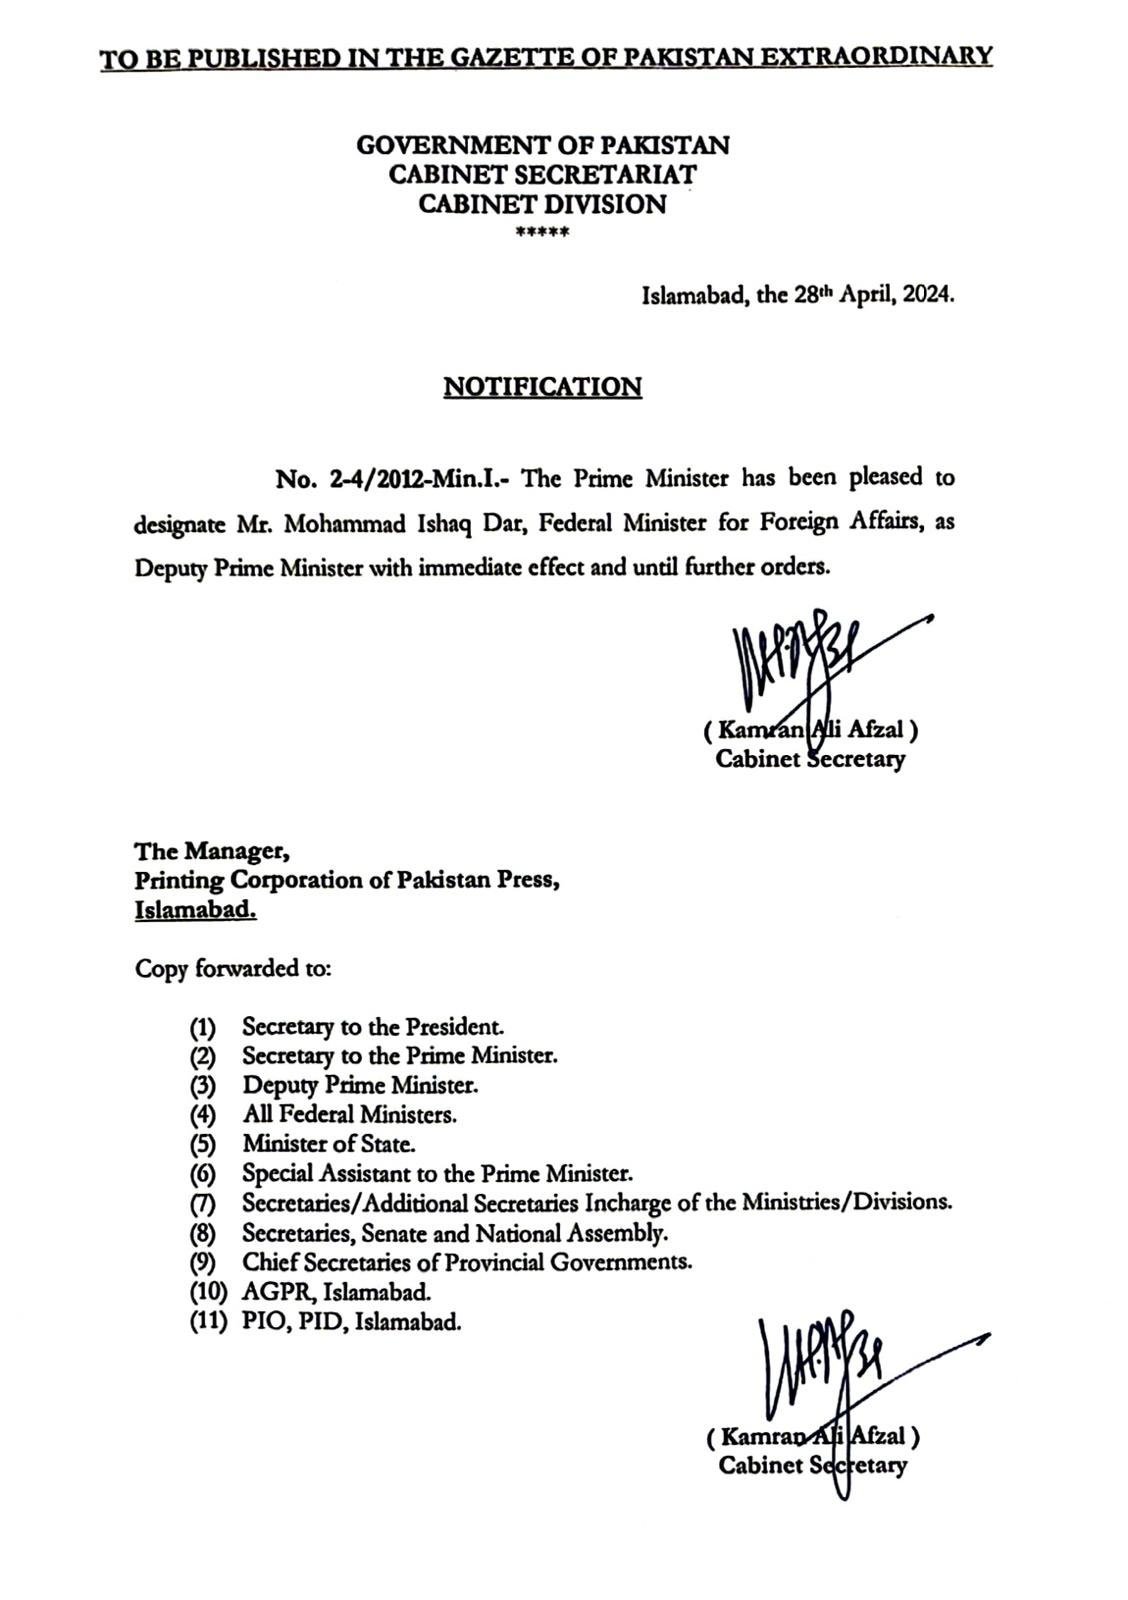 FM Ishaq Dar appointed as deputy prime minister